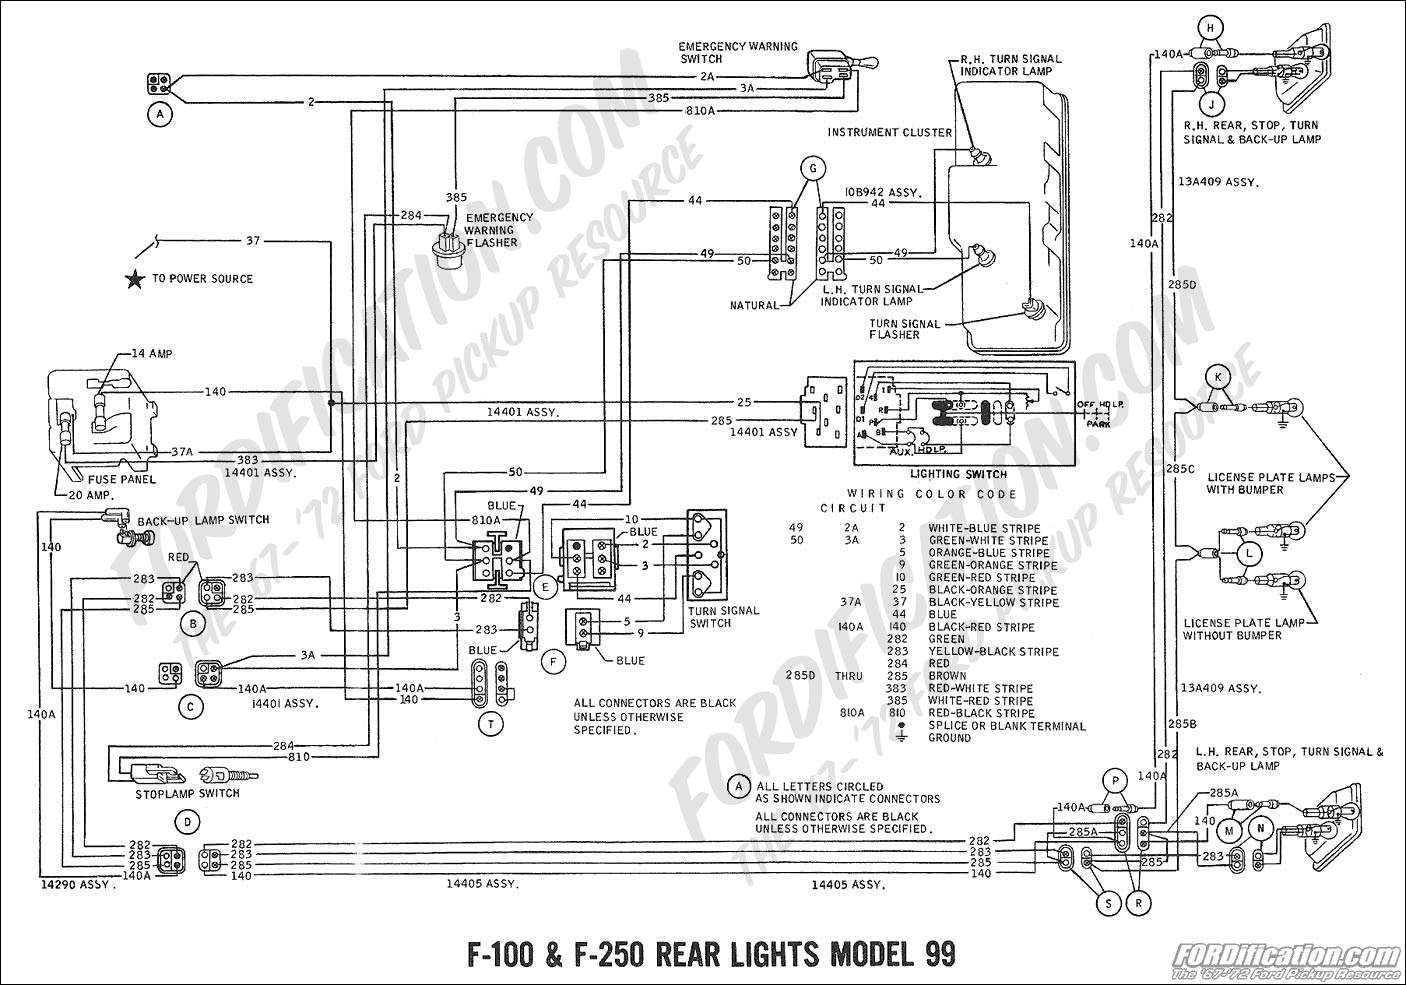 car Light circuit : Automotive Circuits :: Next.gr 1965 mustang marker light wiring diagram 